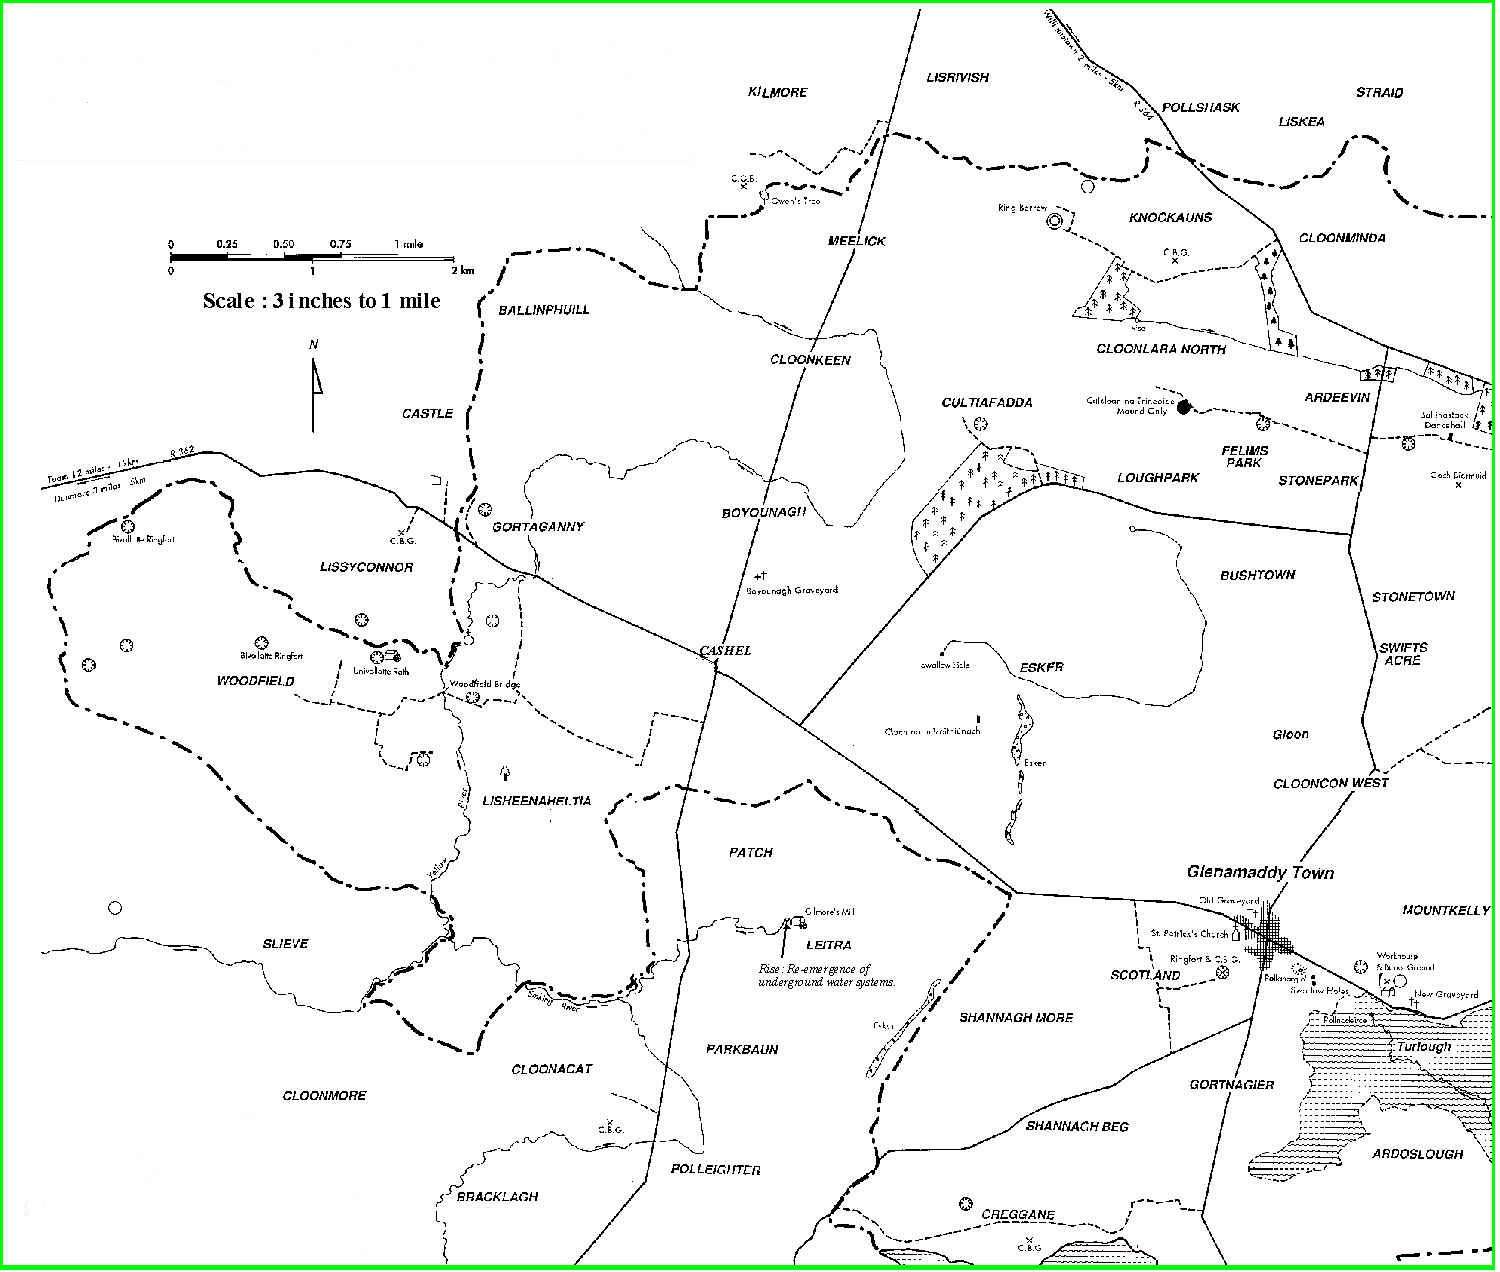 Glenamaddy Ordnance Survey Maps - North West [174KB]